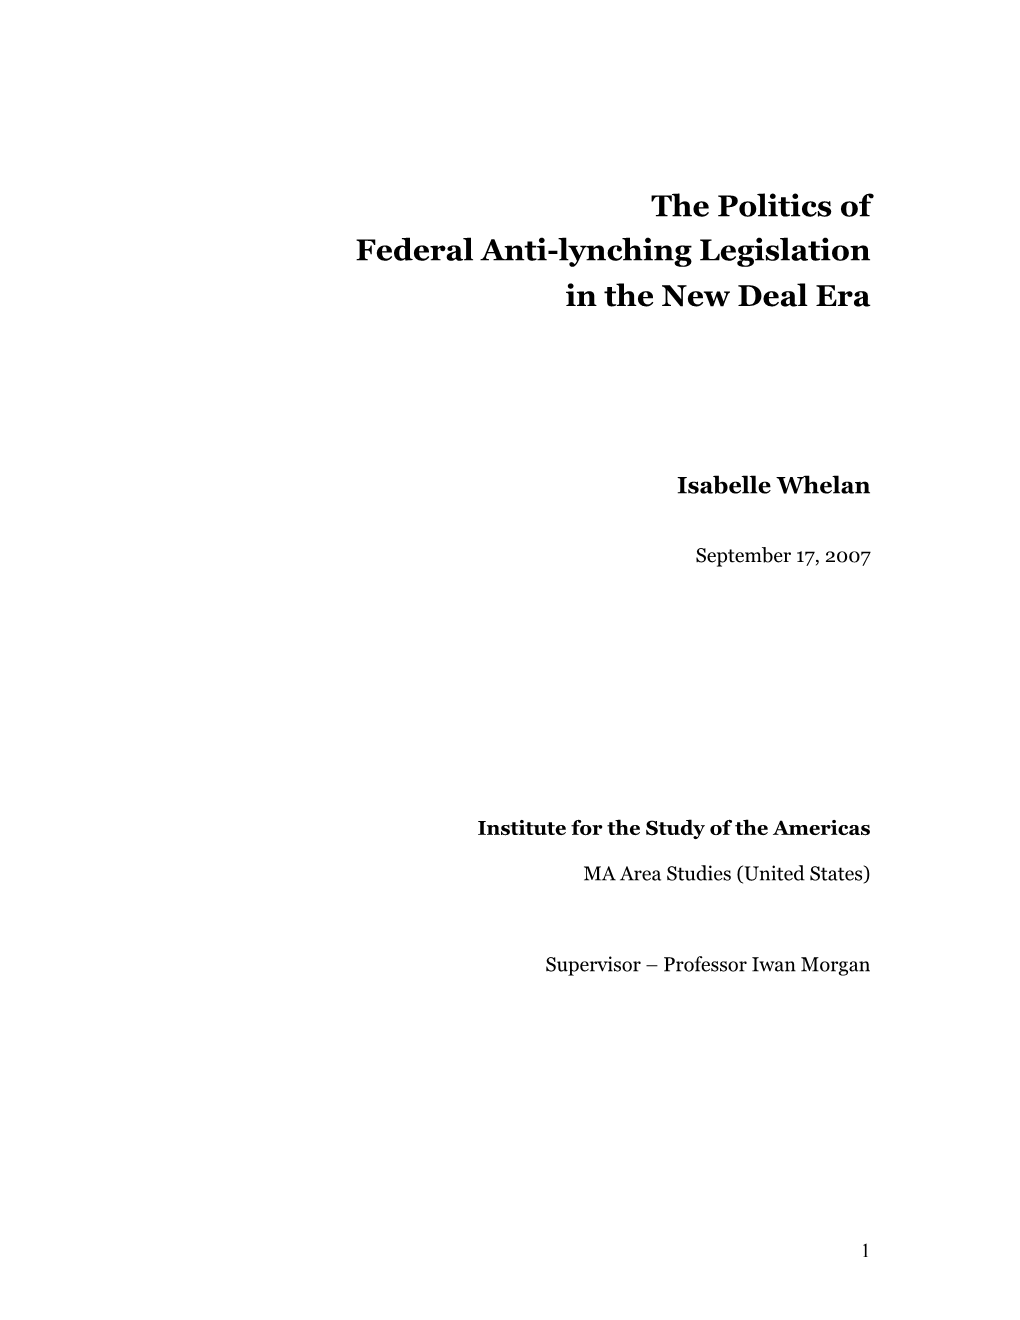 The Politics of Federal Anti-Lynching Legislation in the New Deal Era